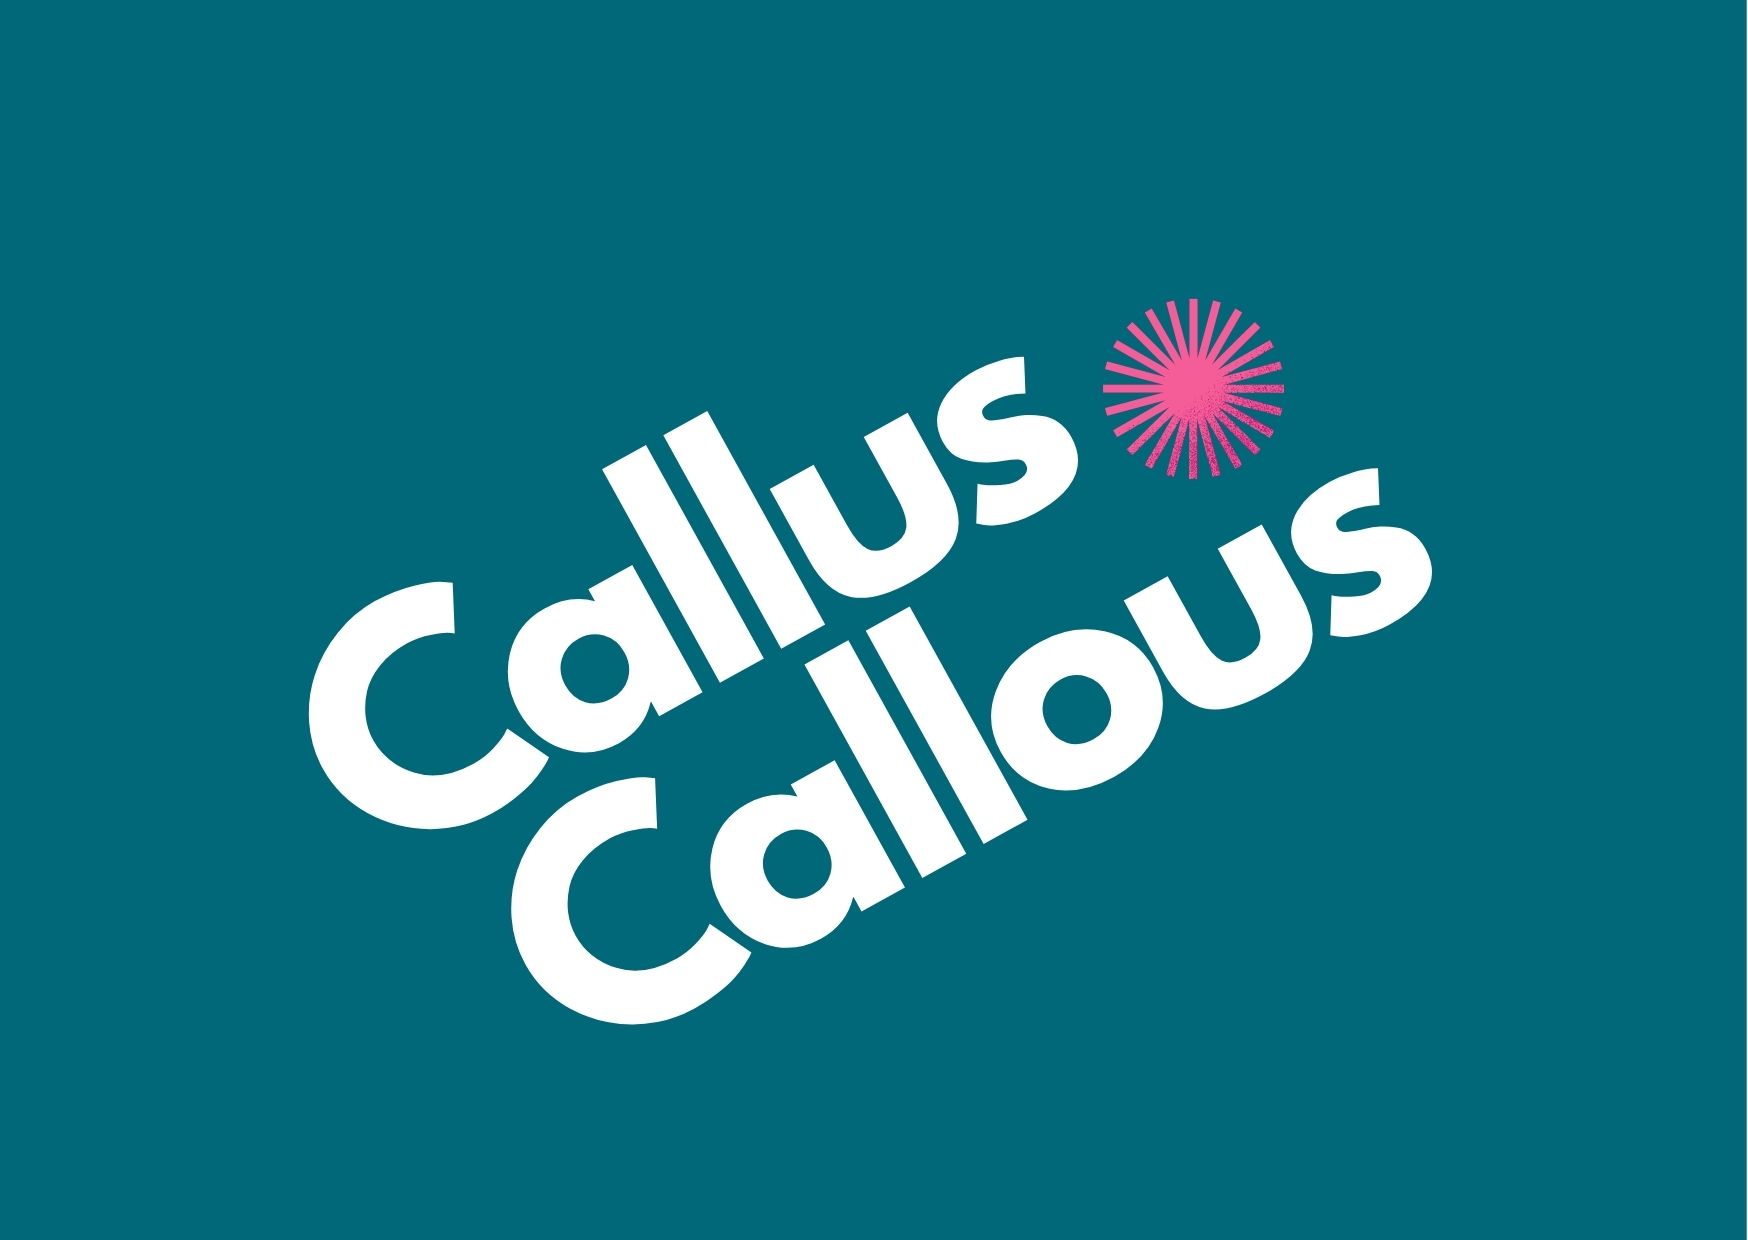 Graphic of two words: callus vs. callous